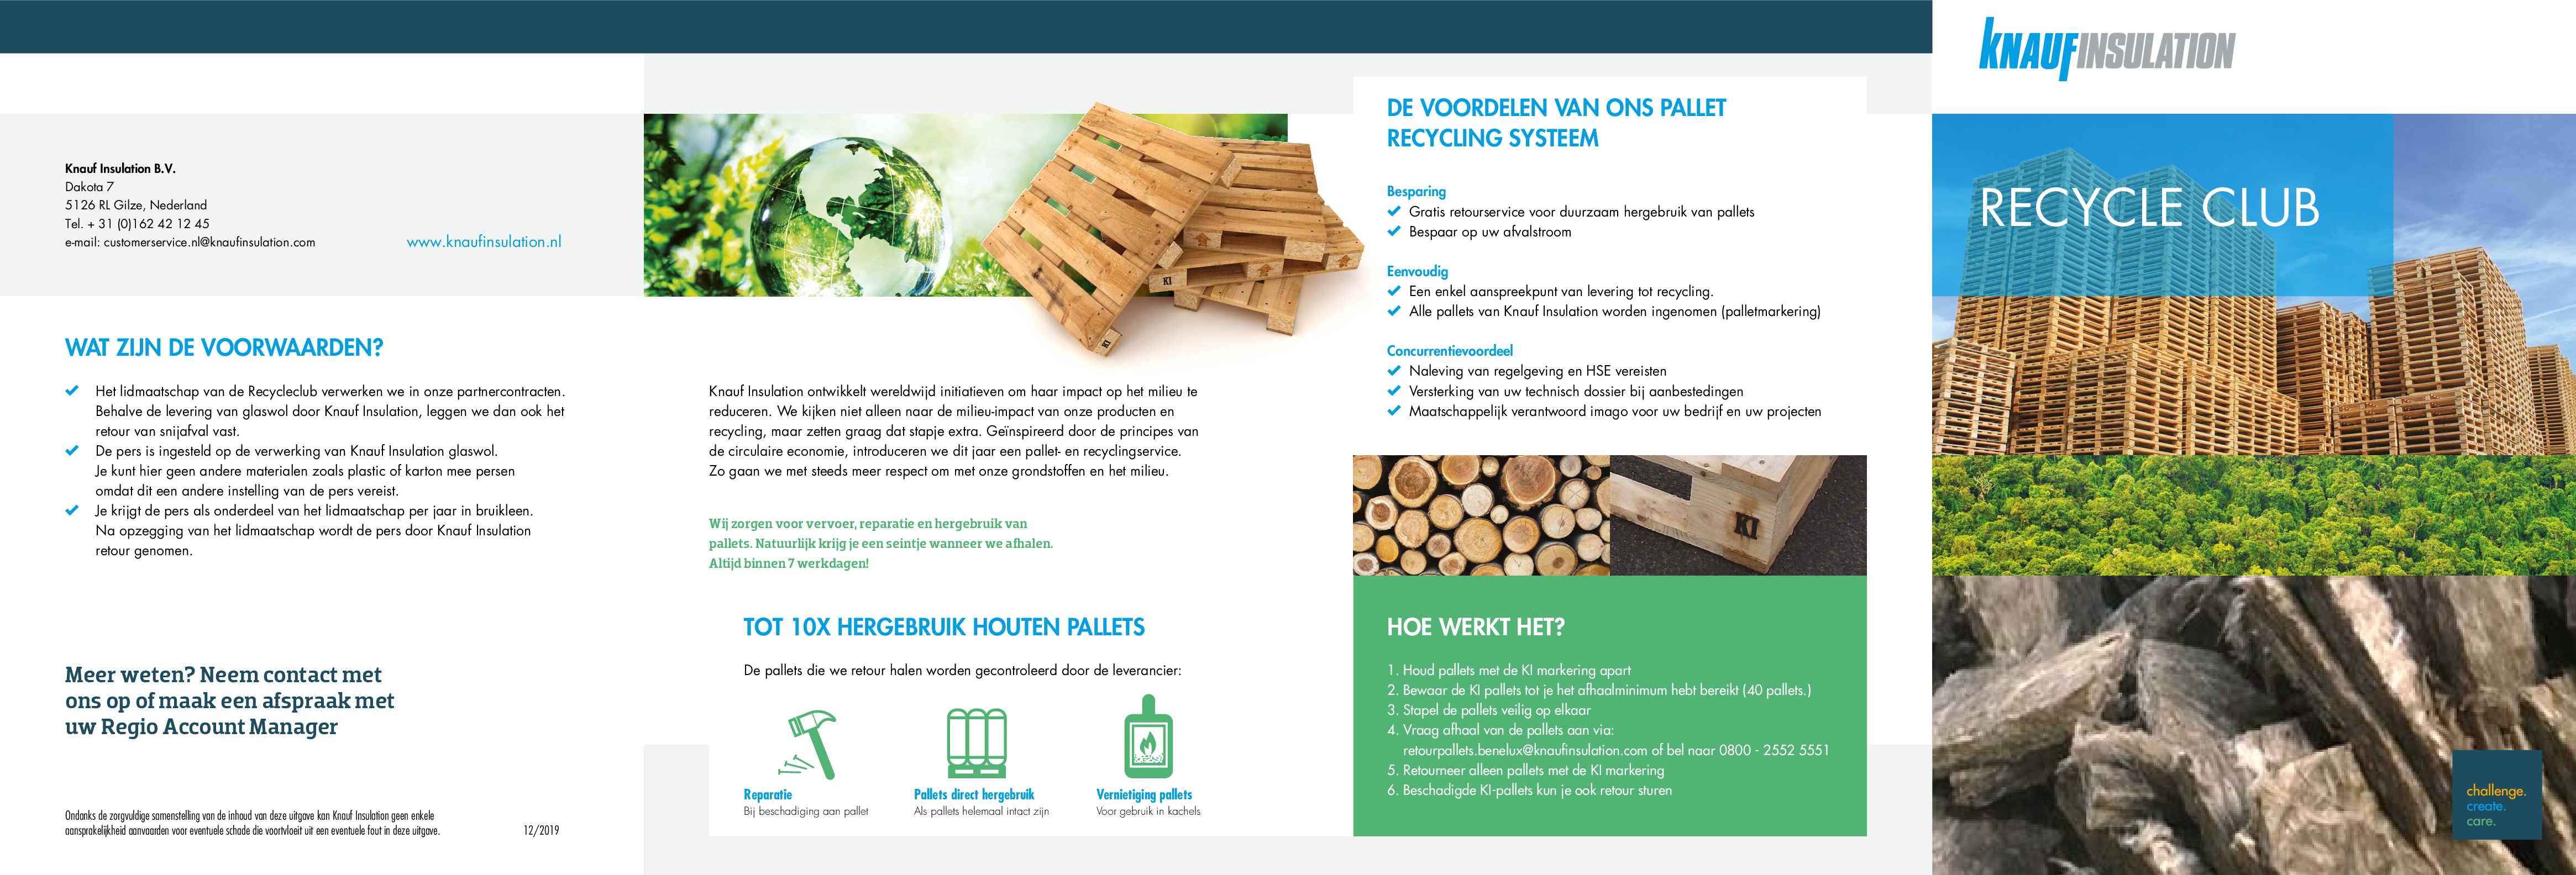 Brochure RecycleClub Knauf Insulation